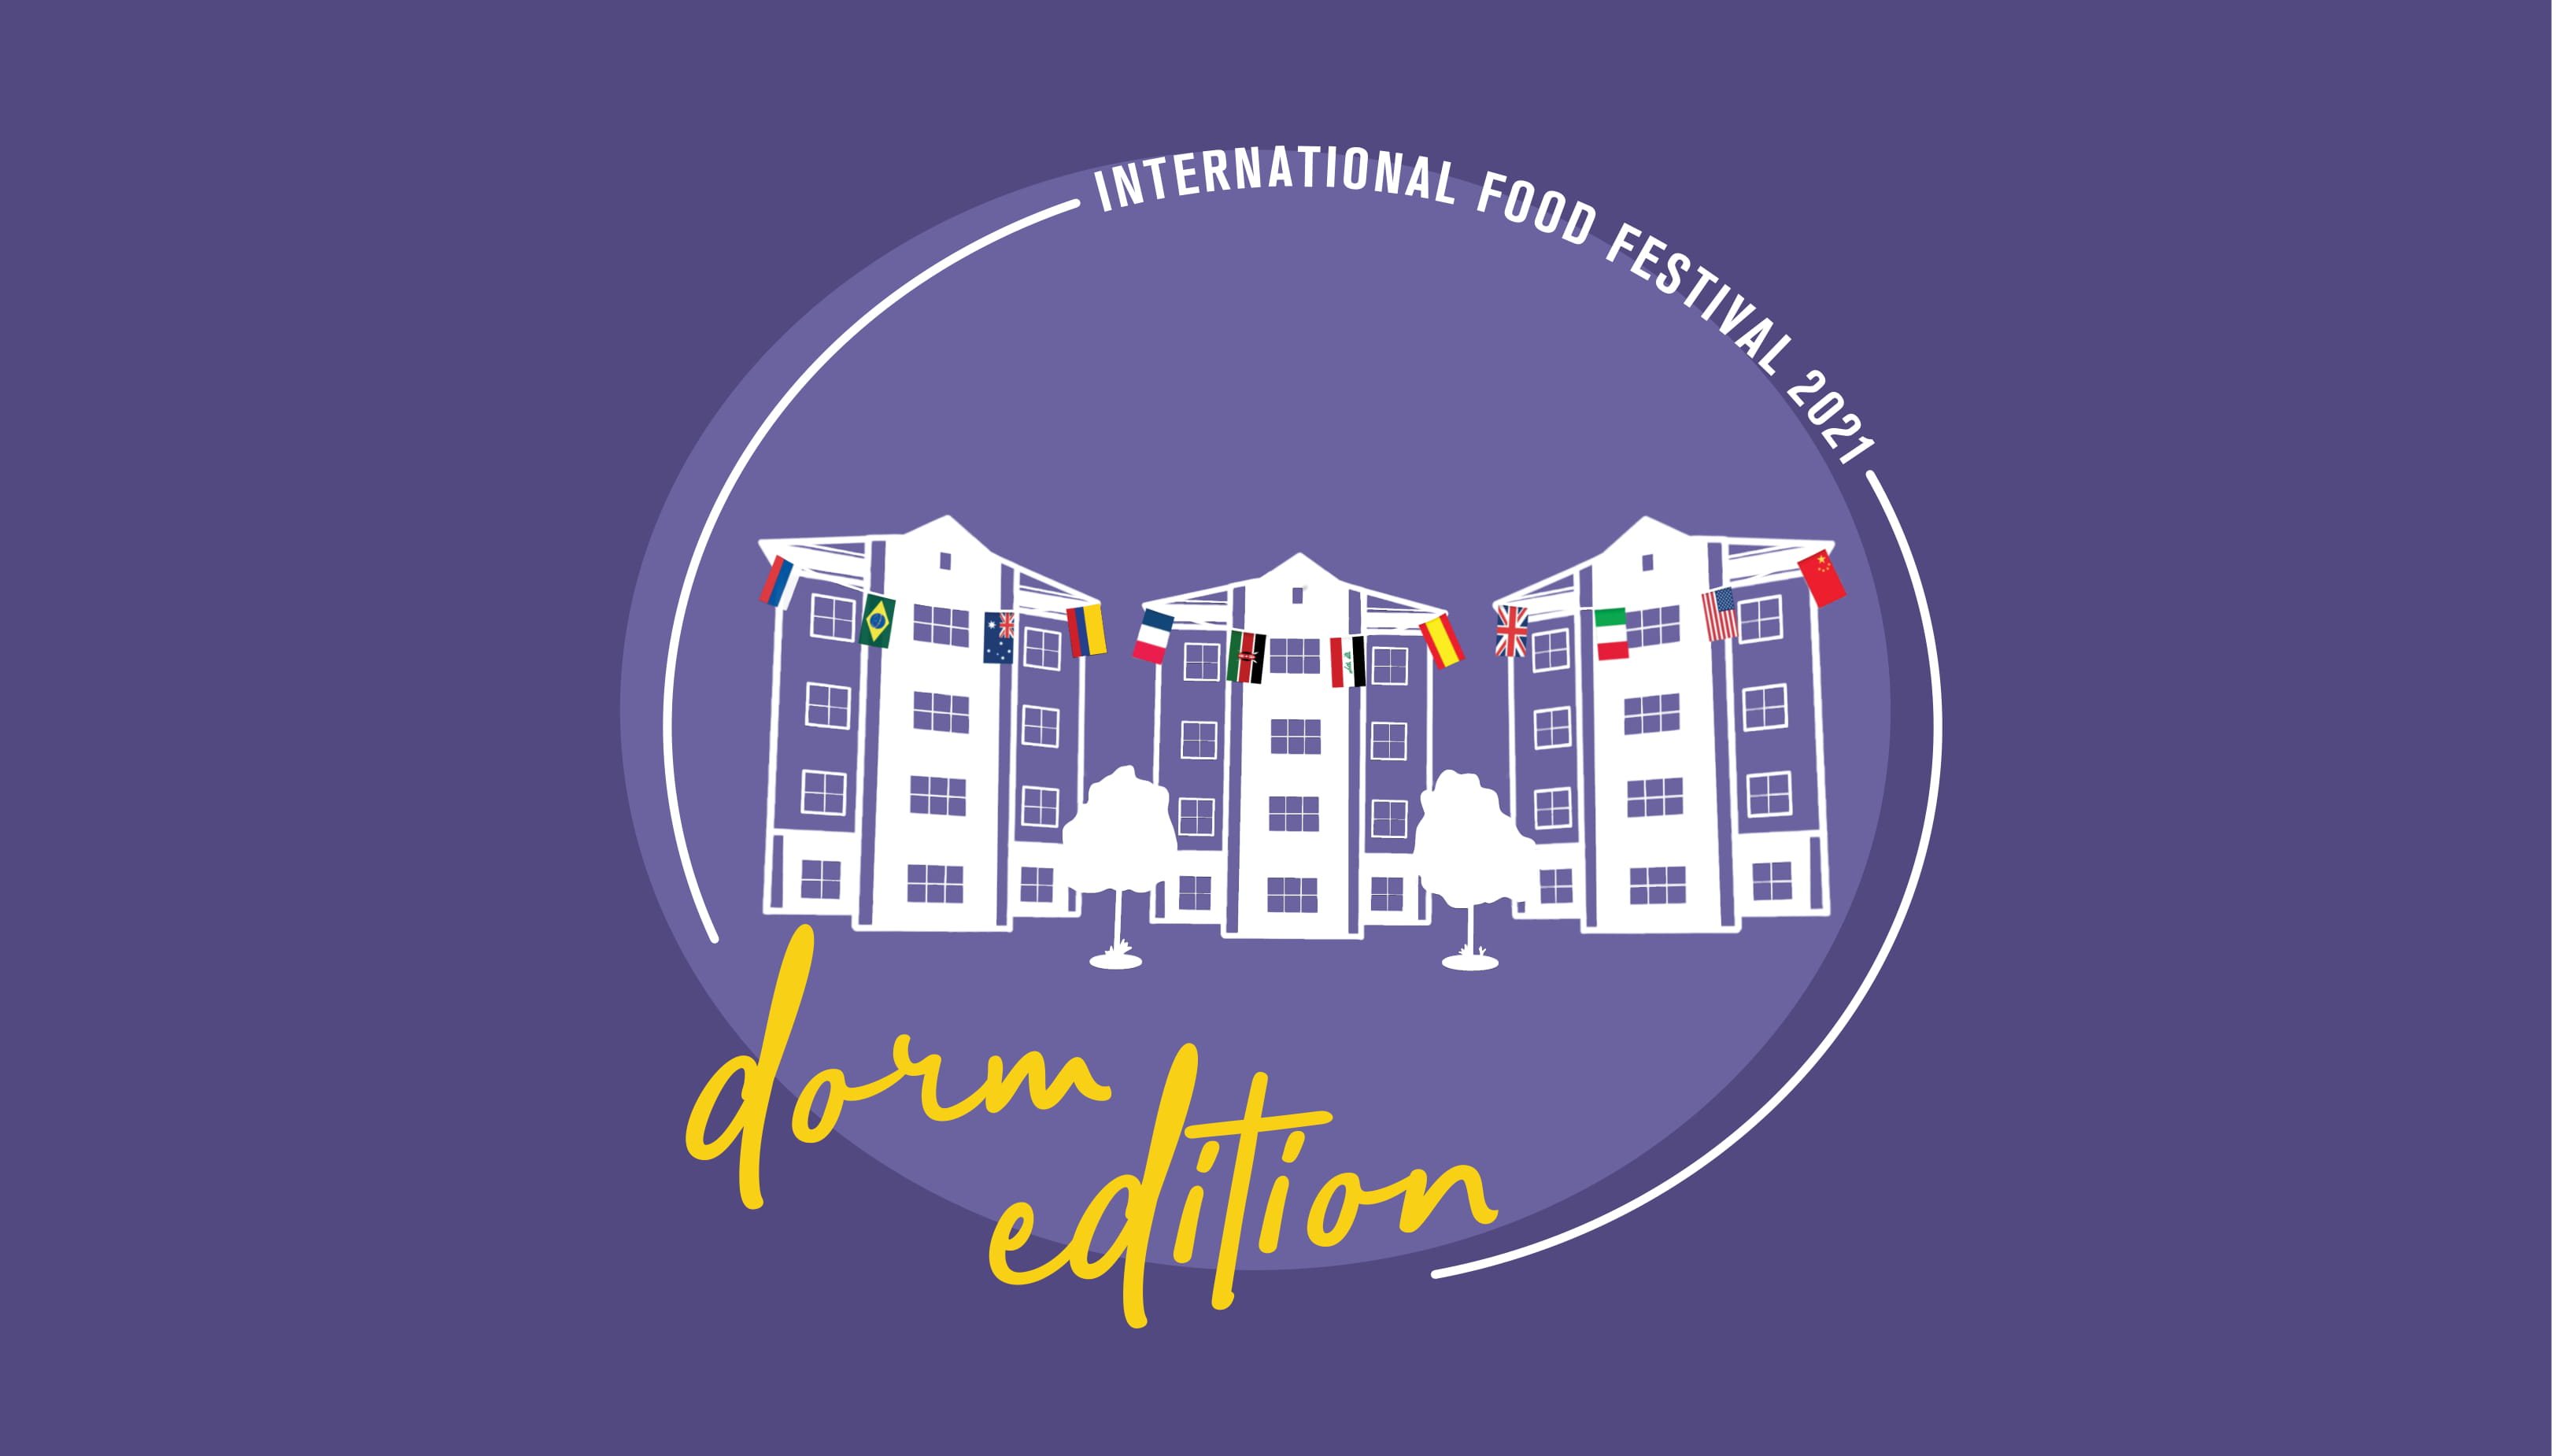 International Food Festival 2021, "Dorm Edition"